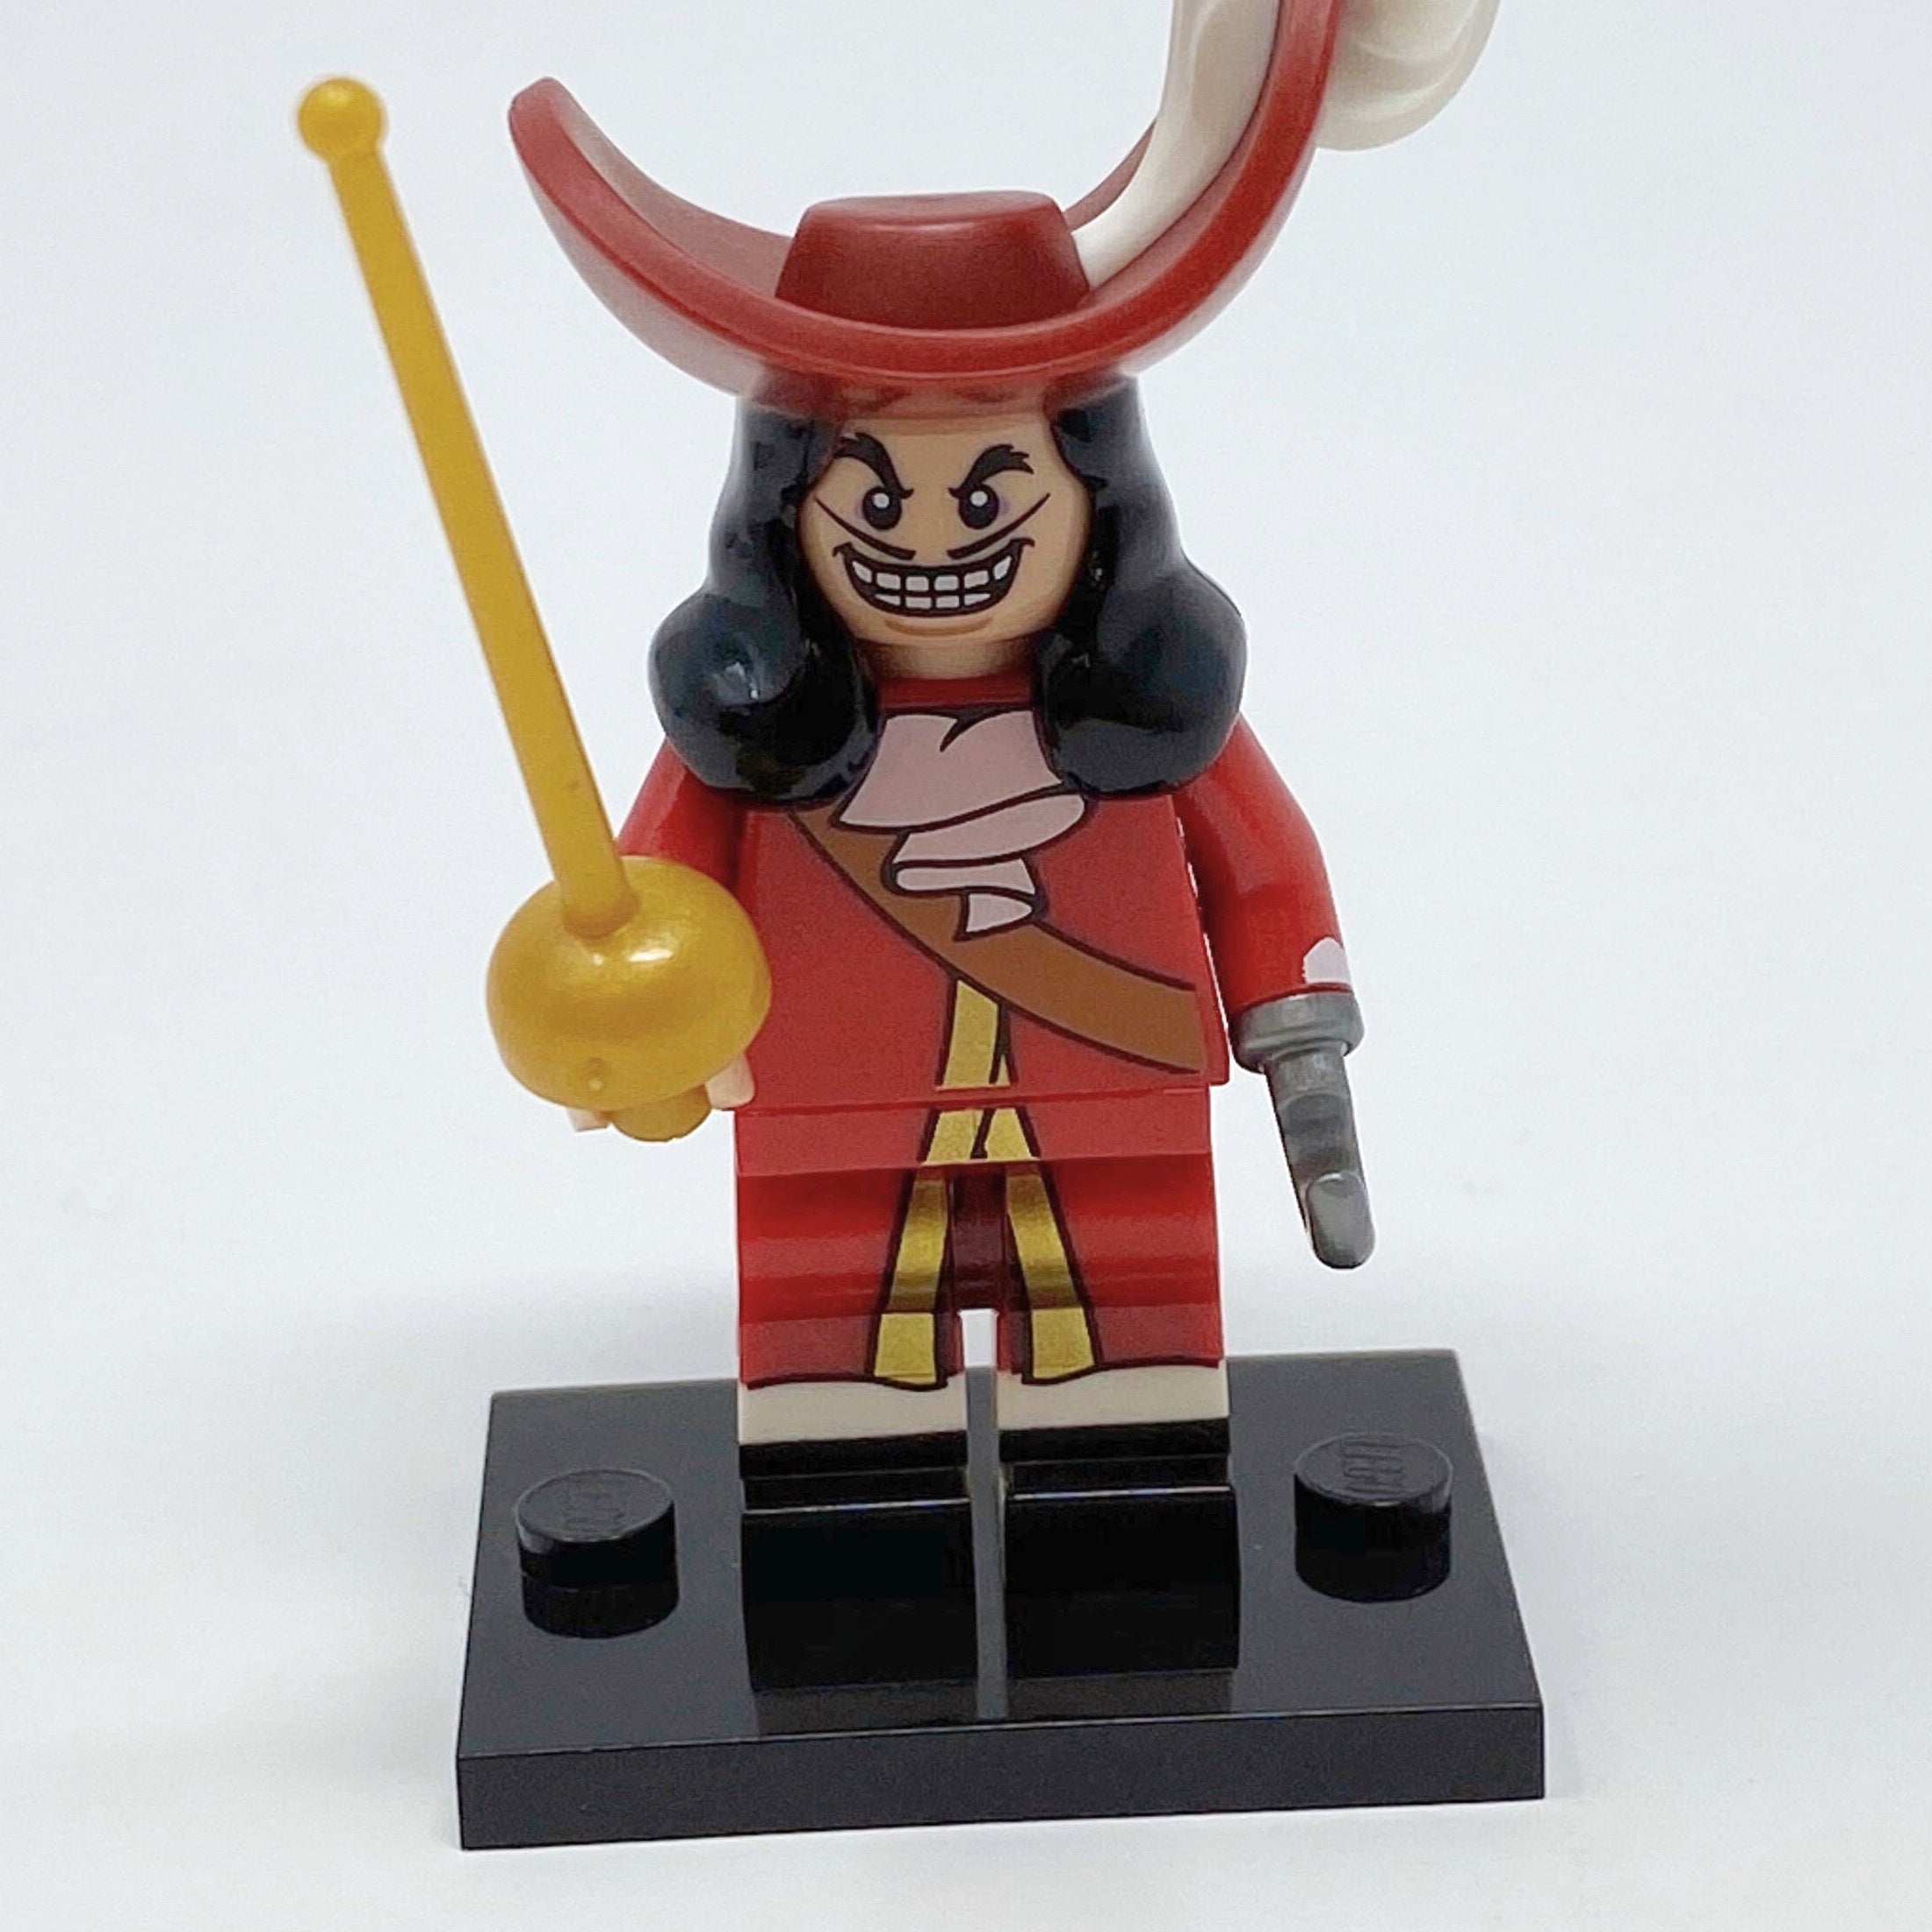 ⭐ LEGO Captain Hook minifigure dis016 Disney Serie 1 71012